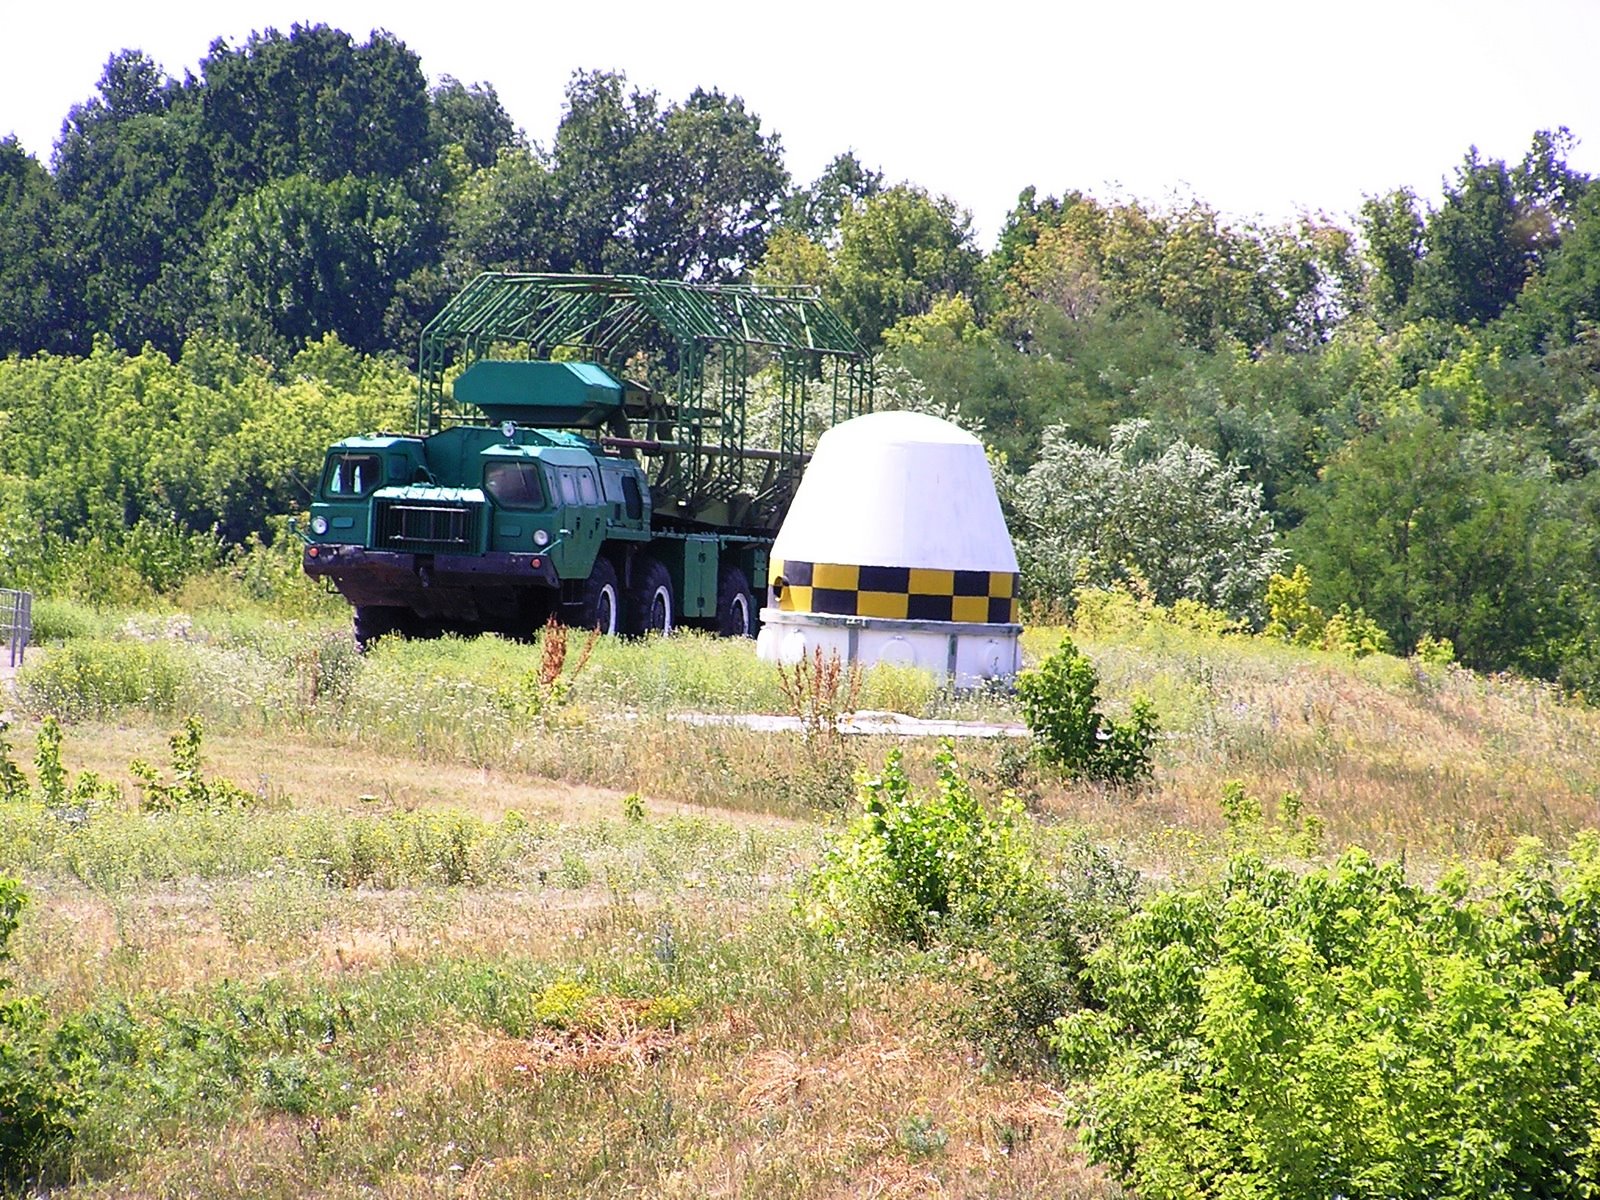 File:MAZ-543 truck for transporting warhead.JPG - Wikimedia Commons